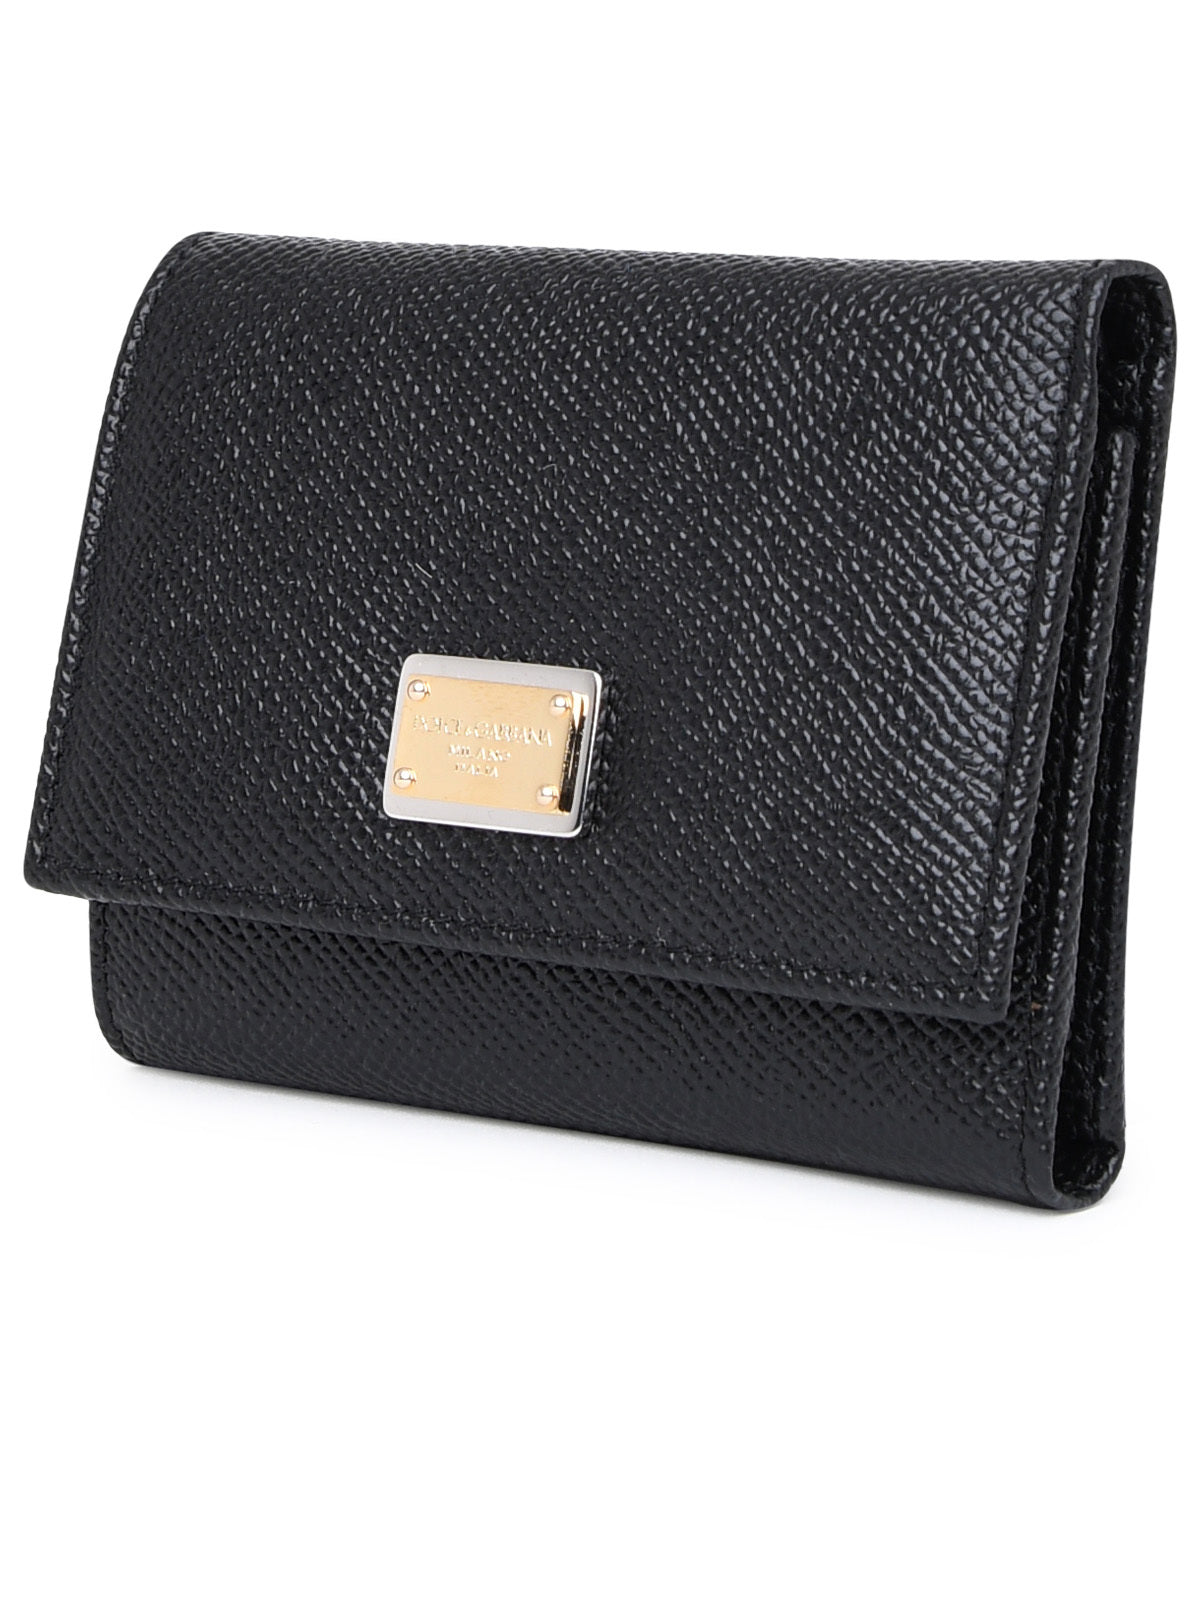 Dolce & Gabbana Woman Black Leather Wallet